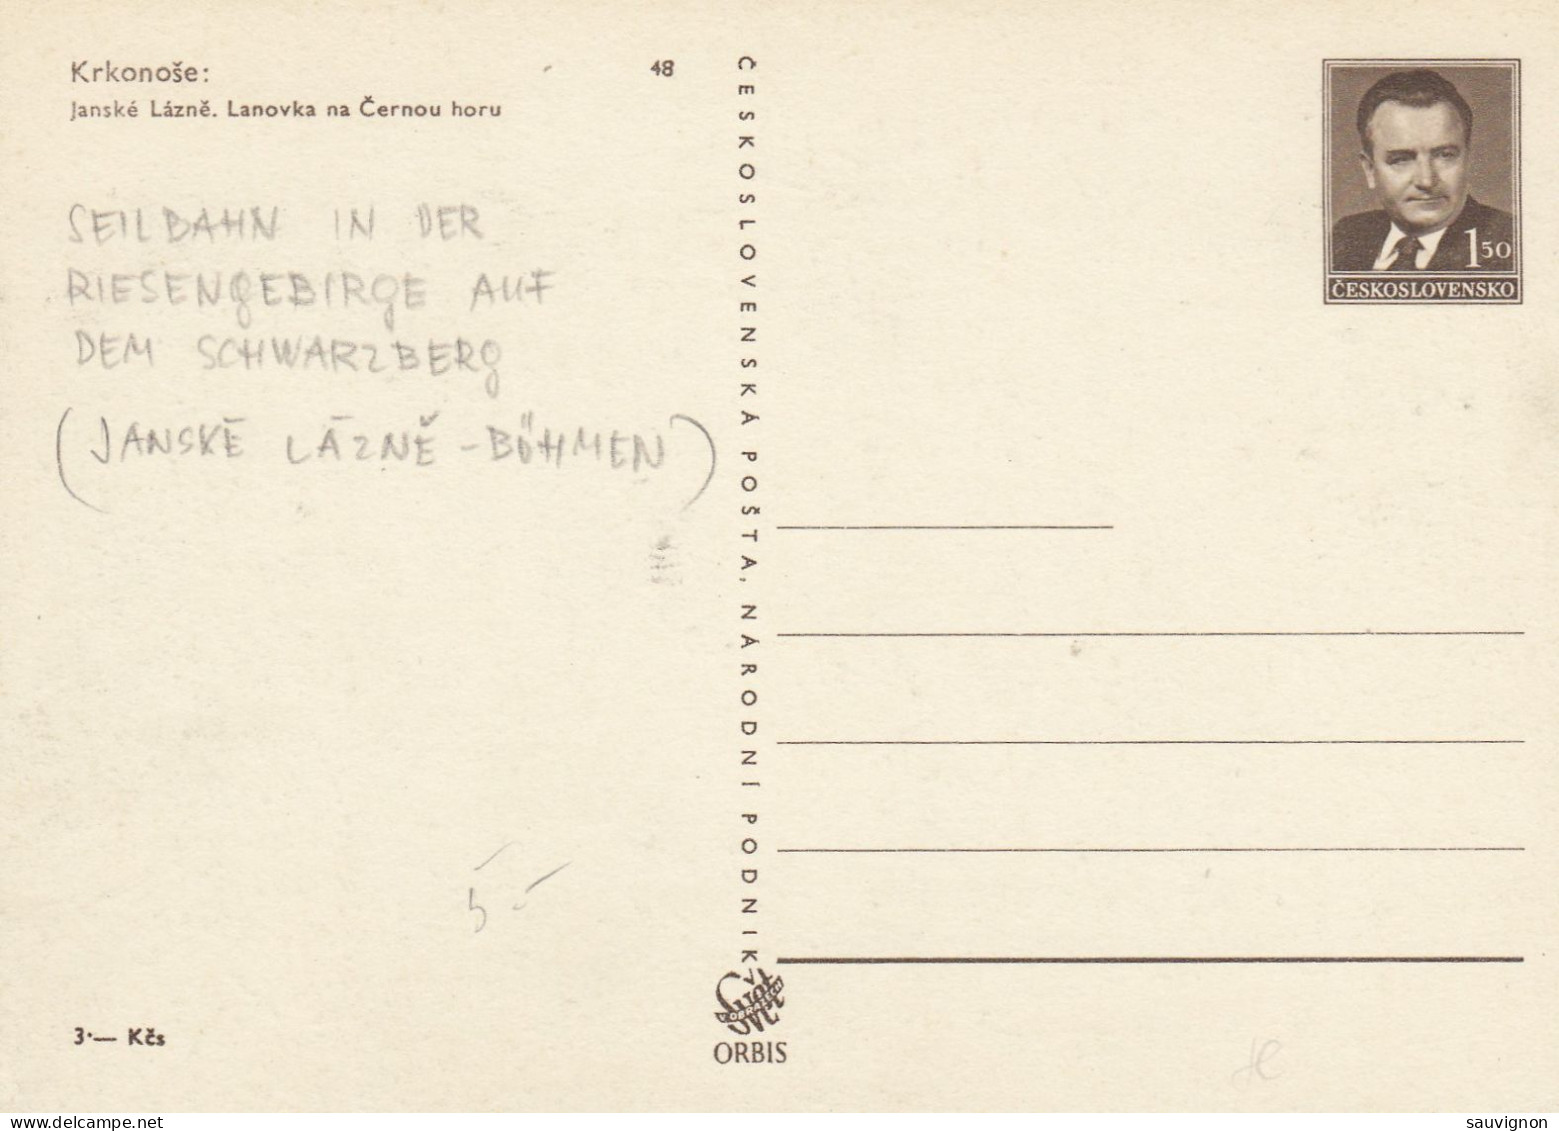 Ceskoslovensko. Bild-Postkarte. Seilbahn Im Riesengebirge Auf Den Schwarzberg (Janské Lazné), Krkonose, 1950 - Lettres & Documents